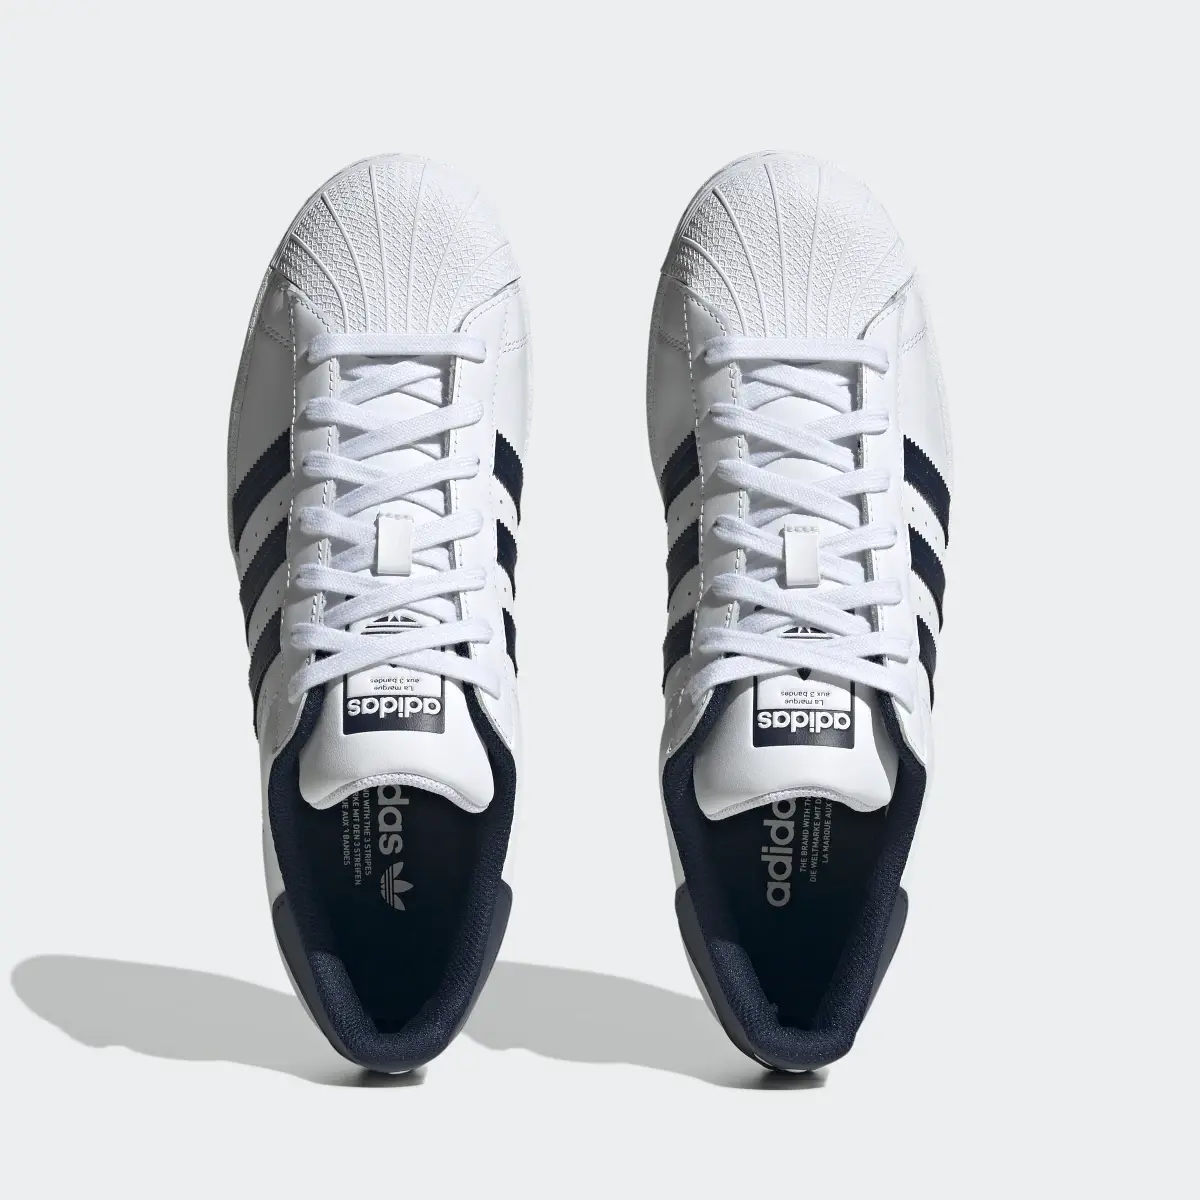 Adidas Scarpe Superstar. 3